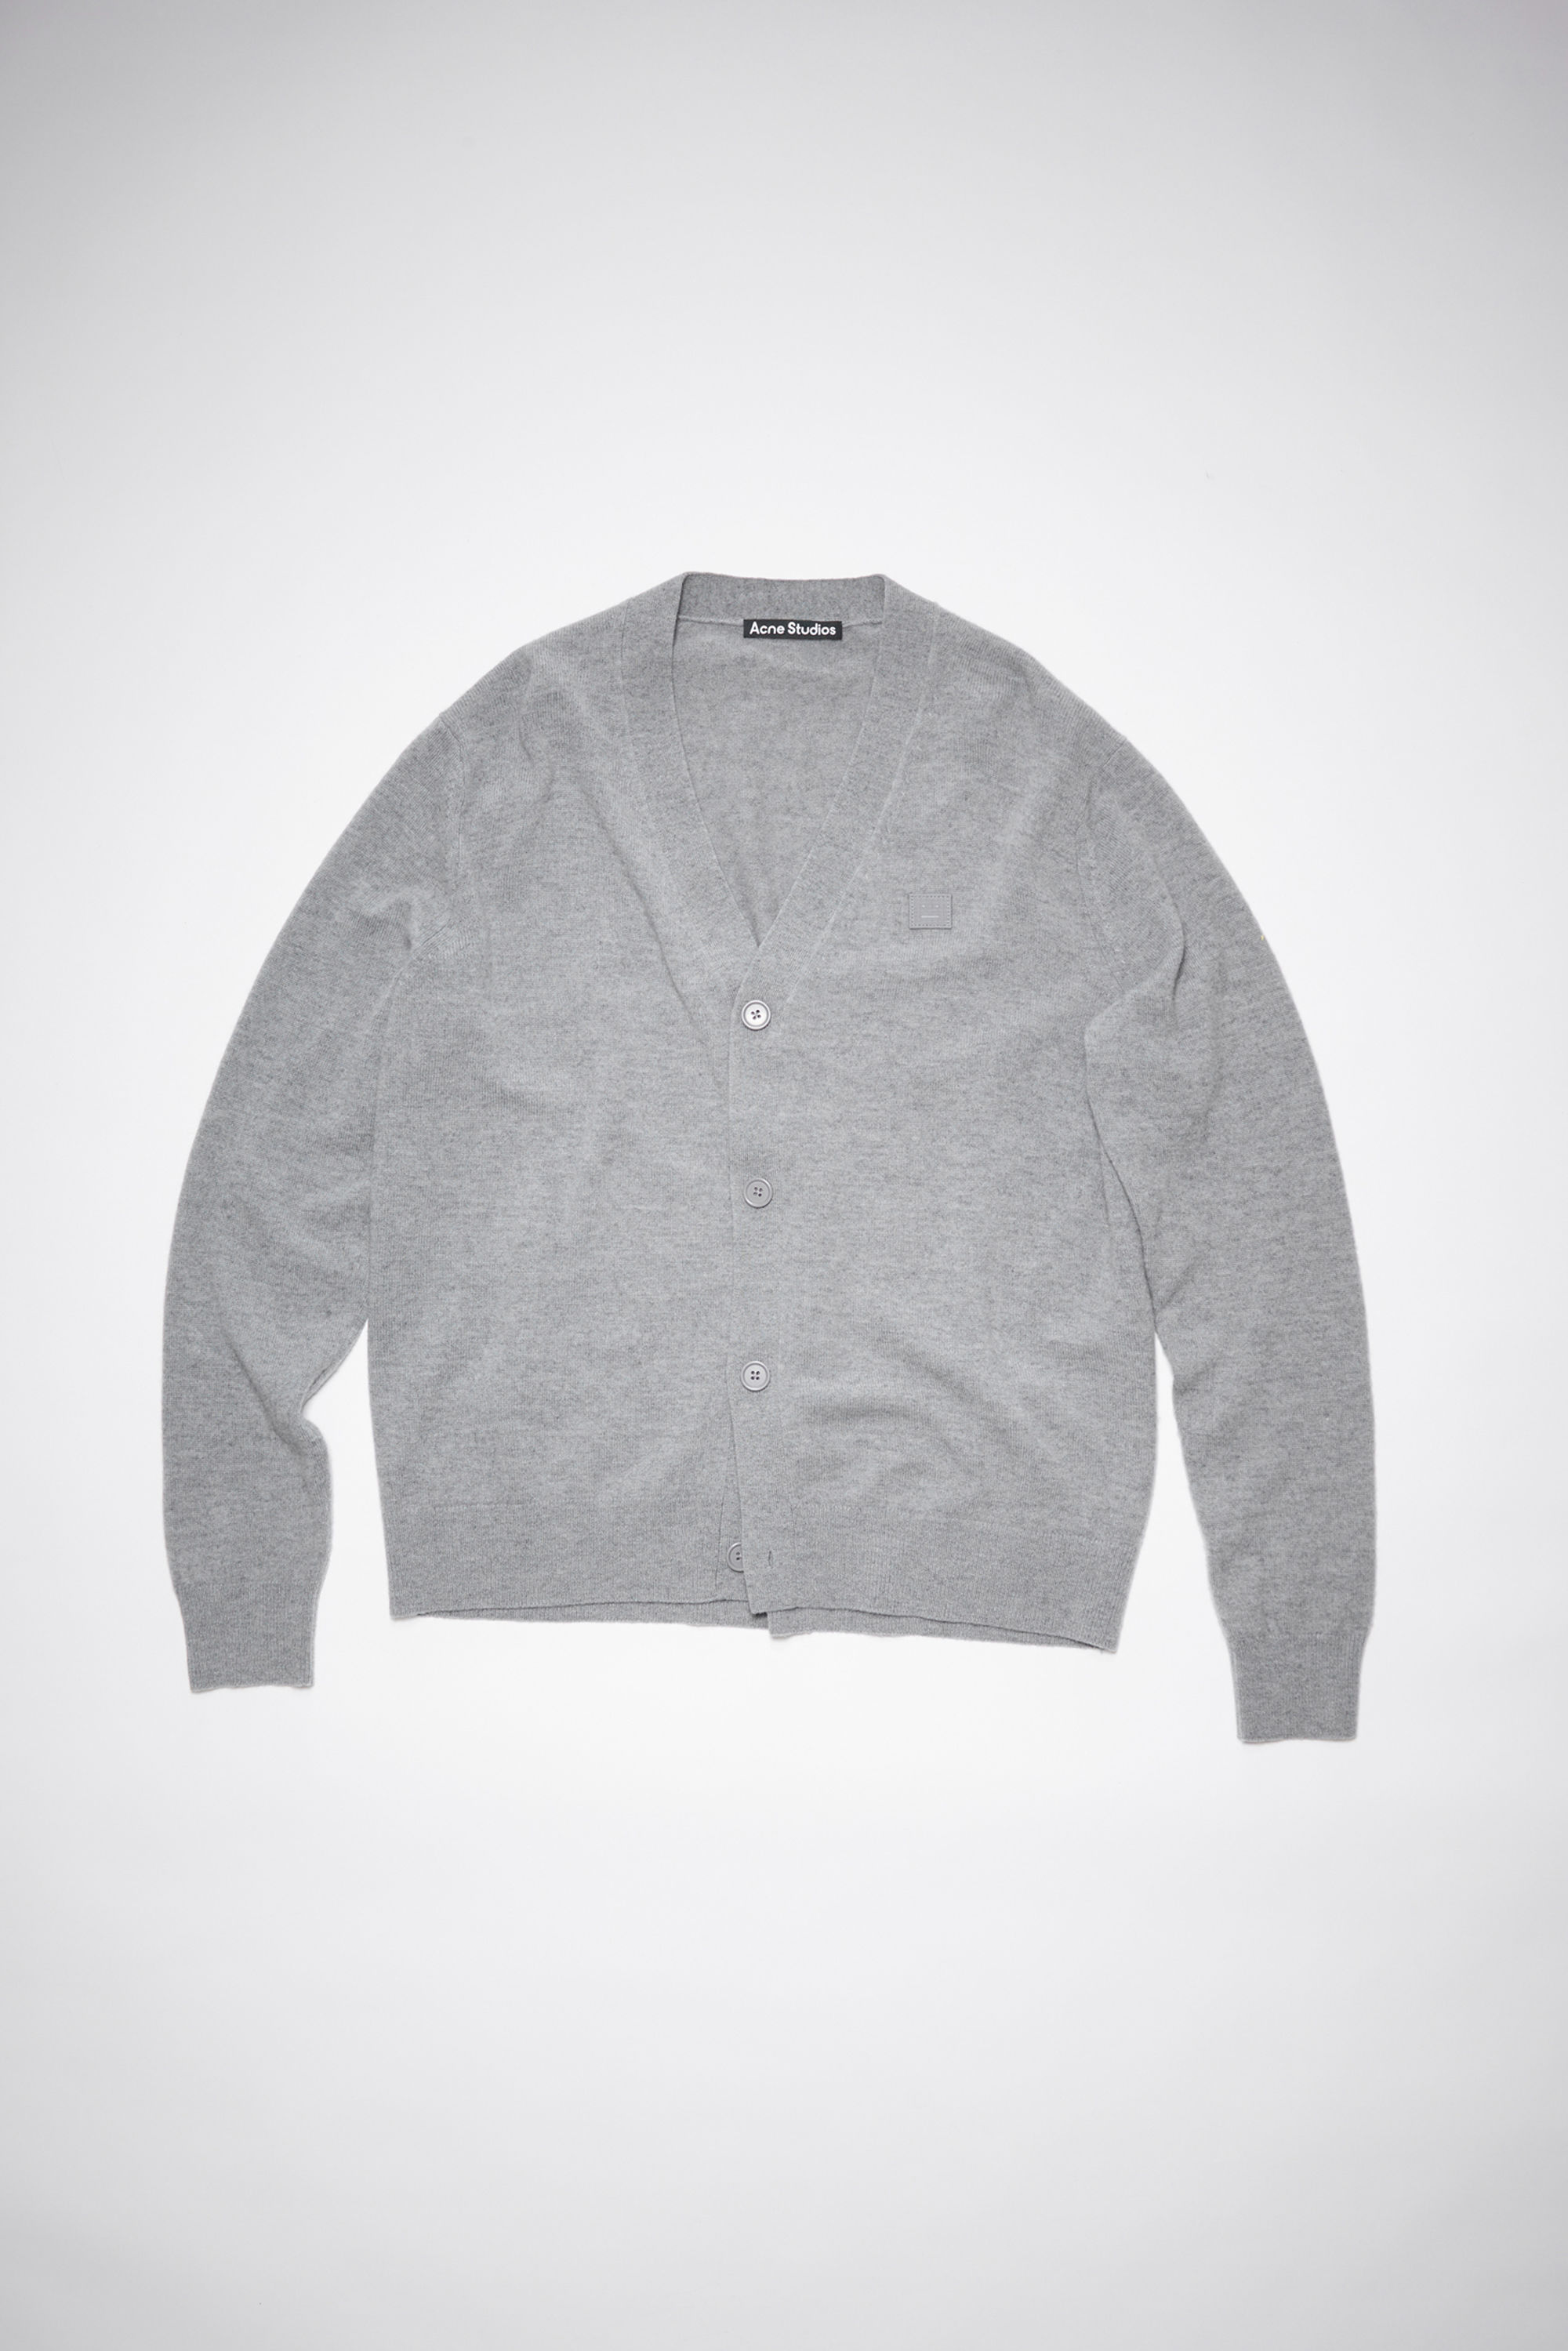 Acne Studios Wool Knit Cardigan In Grey Melange